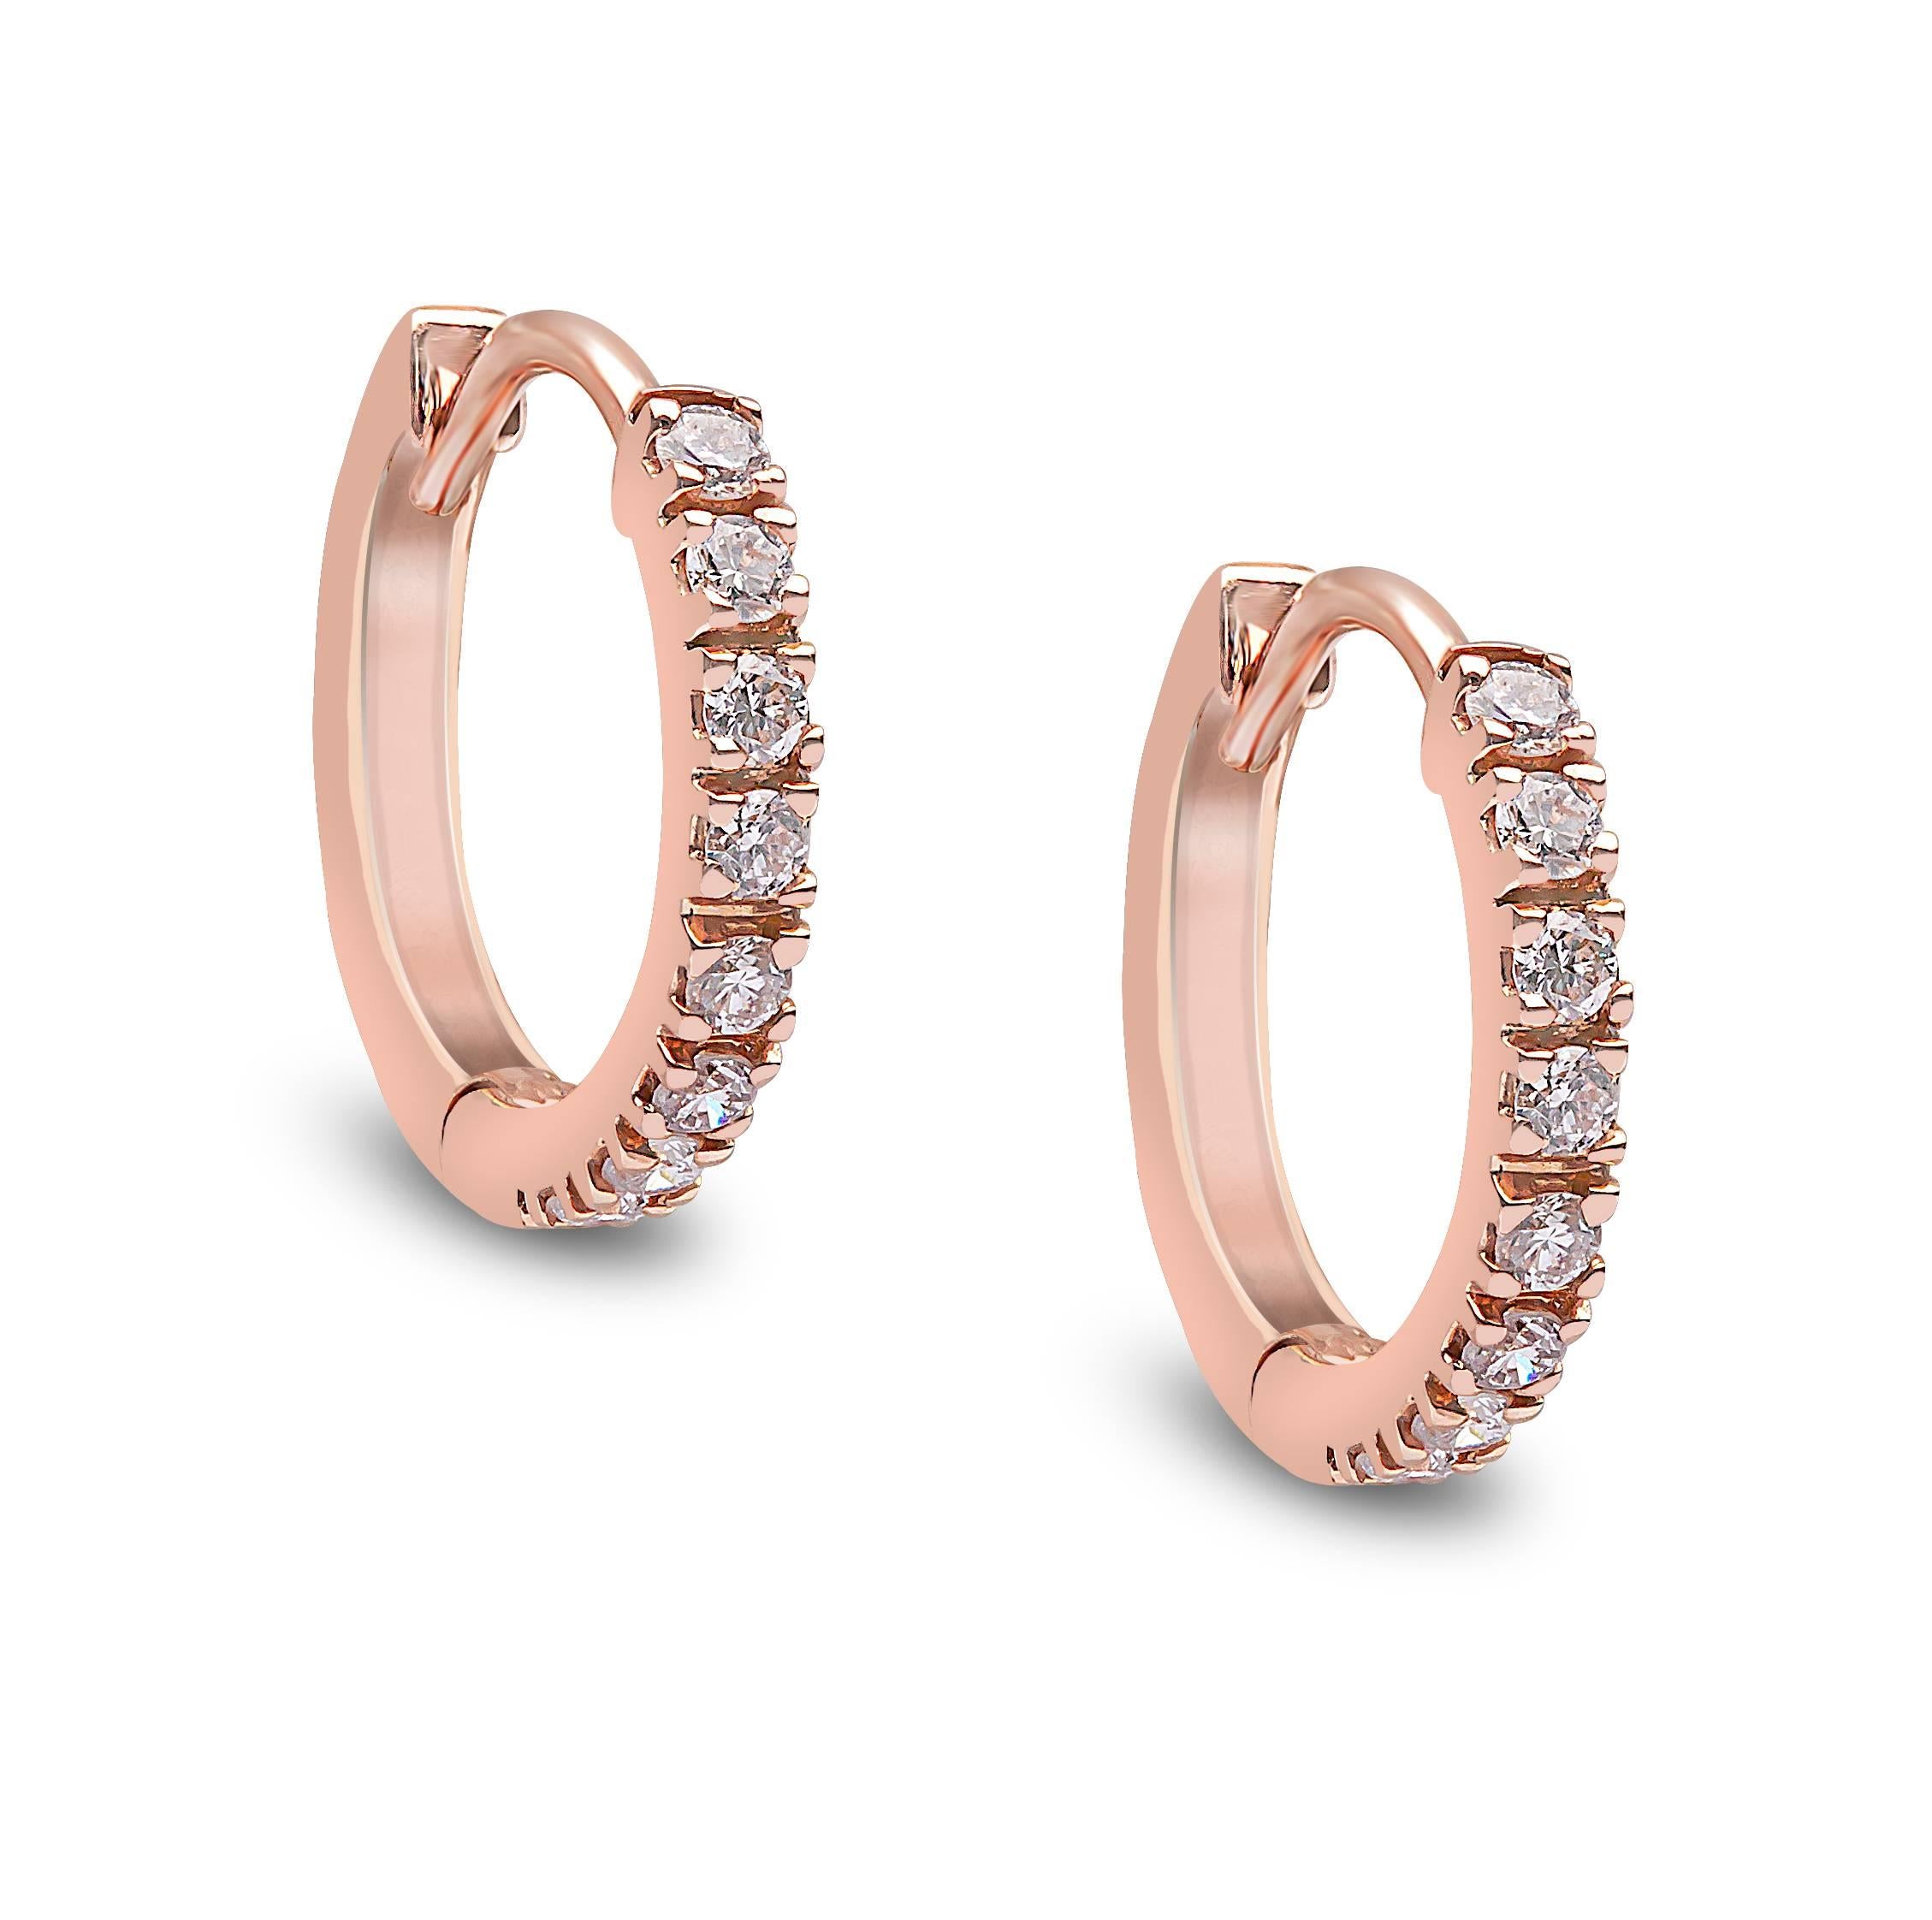 Contemporary Yoko London South Sea Pearl and Diamond Hoop Earrings in 18 Karat Rose Gold